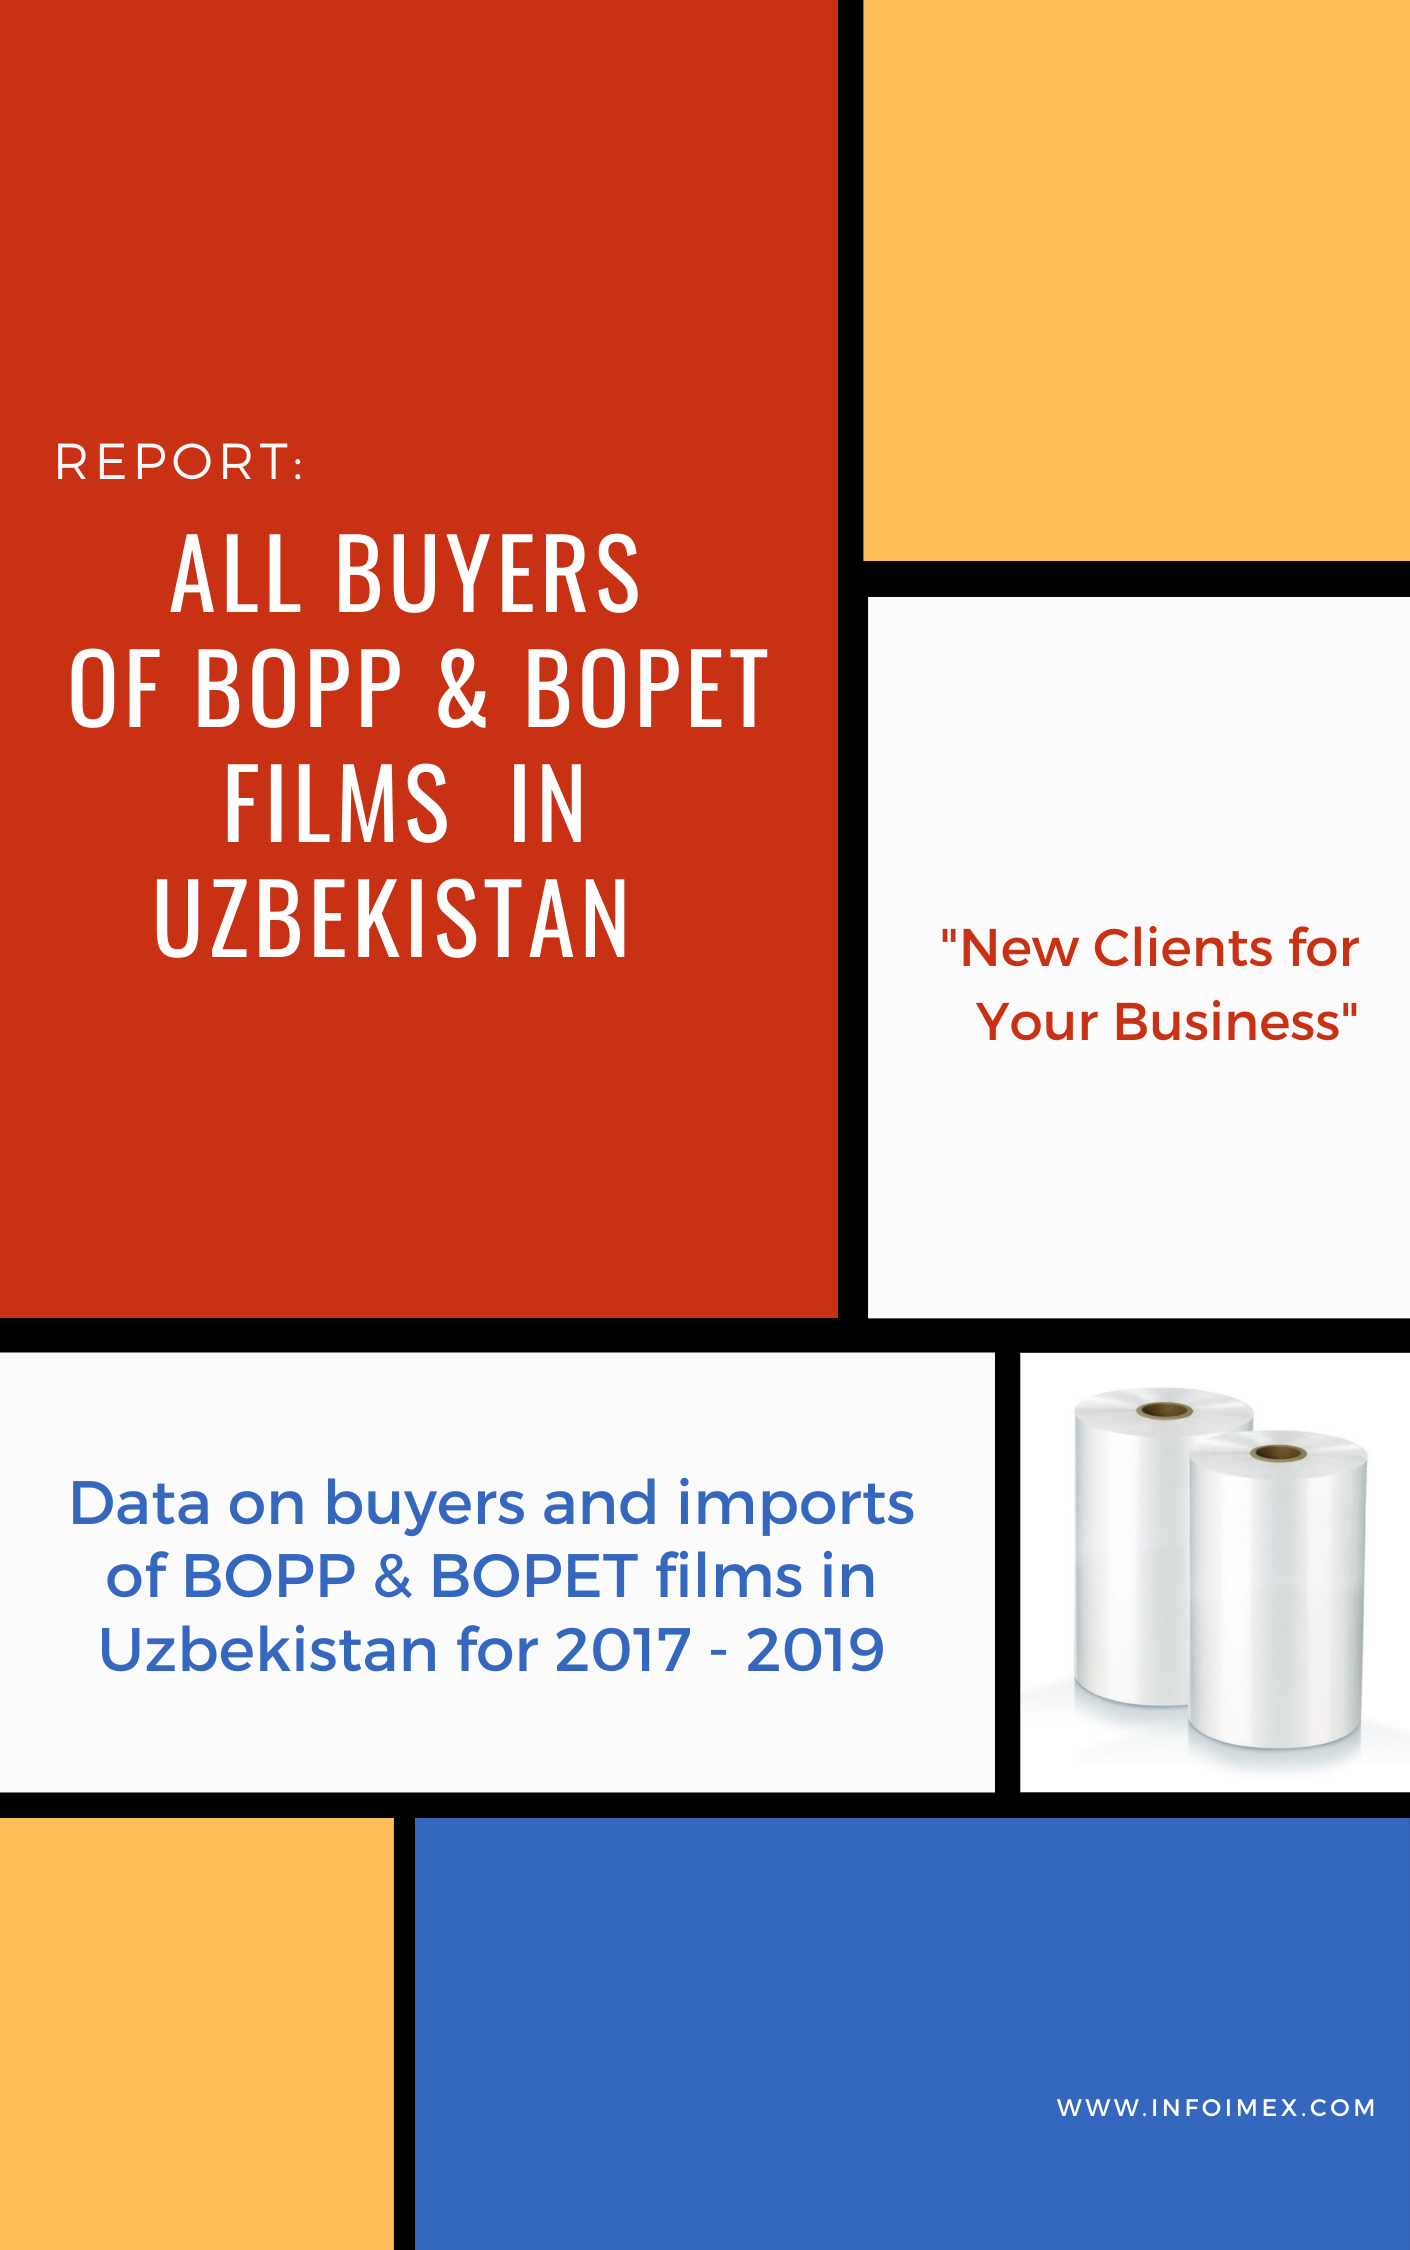 All consumers of BOPP films of Uzbekistan